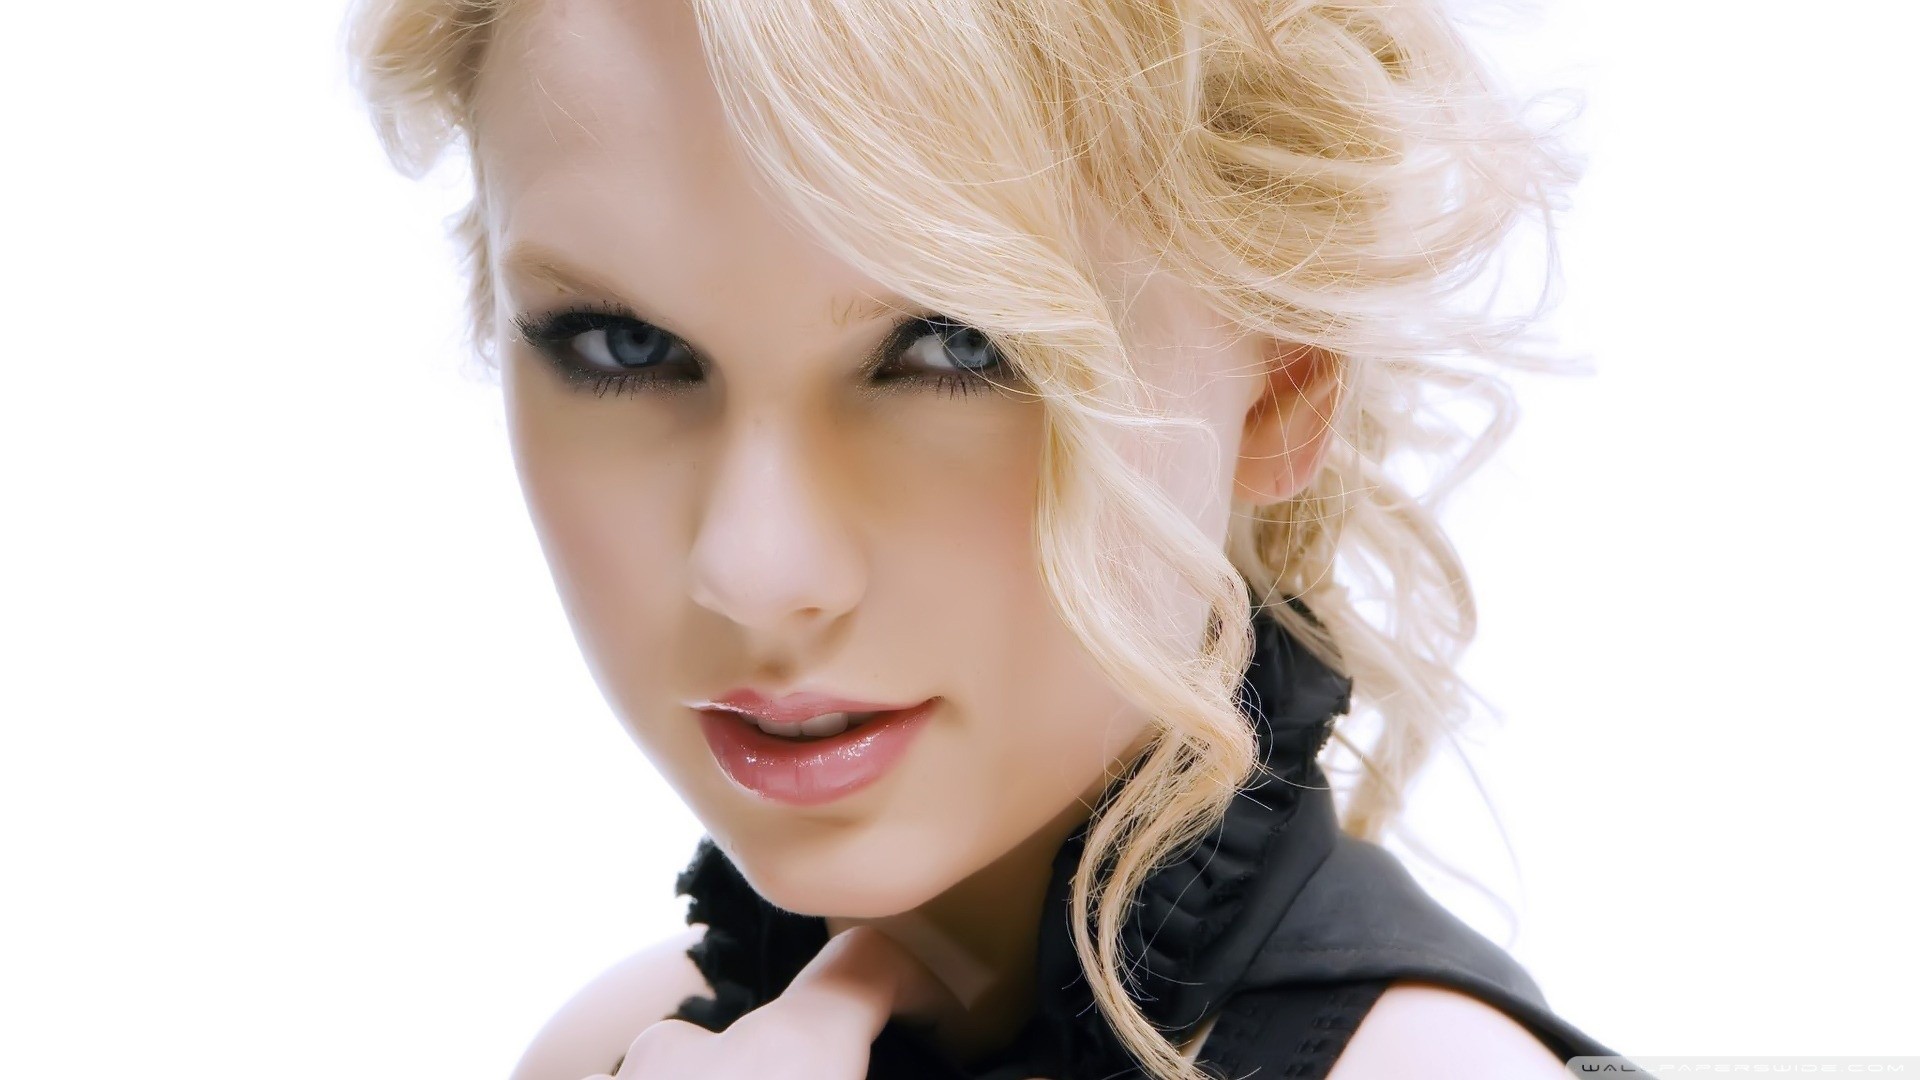 blondes, women, Taylor Swift, celebrity, faces - desktop wallpaper